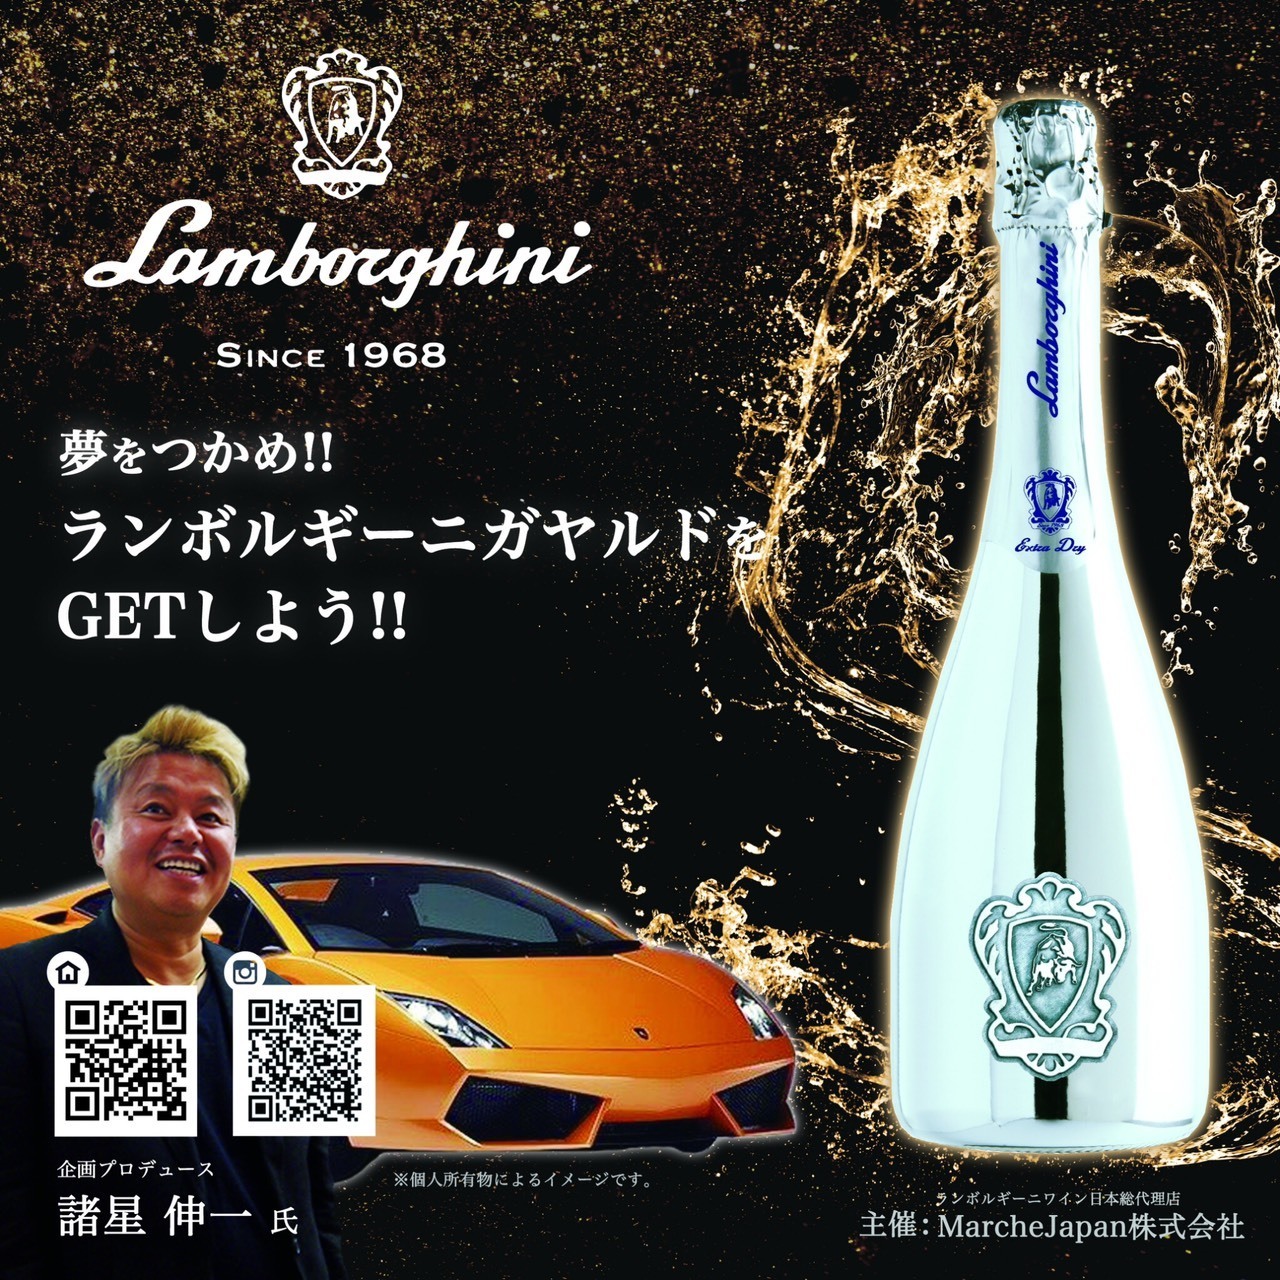 Lamborghini Winning Award 8 1から開催 高級車ランボルギーニ ガヤルドや旅行など豪華賞品がプレゼントされる夢のようなキャンペーンがスタート Marchejapan株式会社のプレスリリース